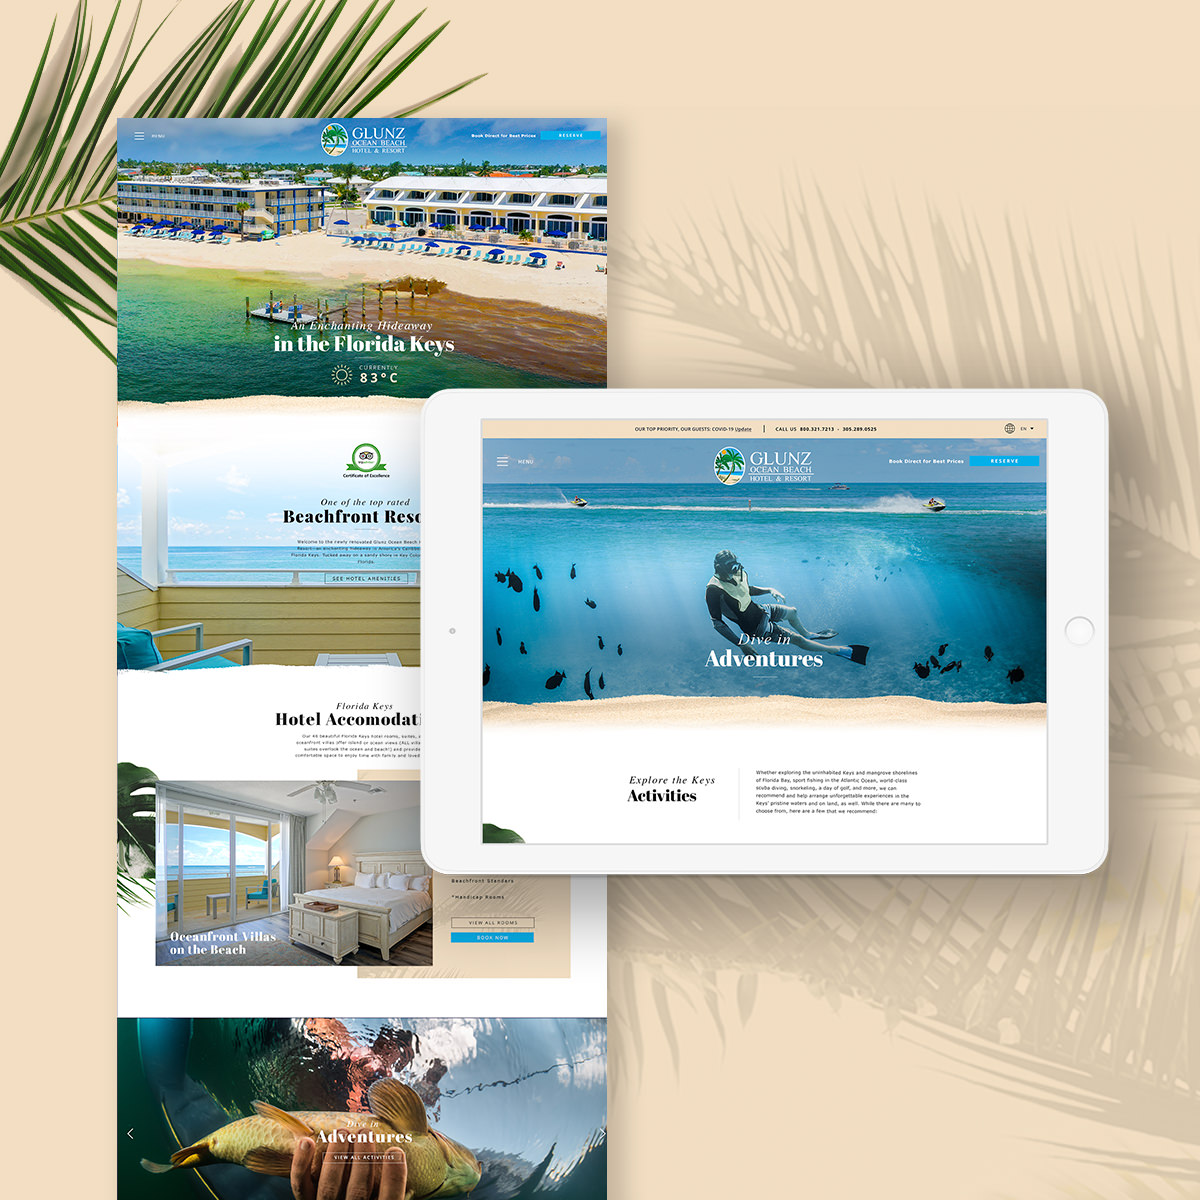 Glunz Florida Keys Resort